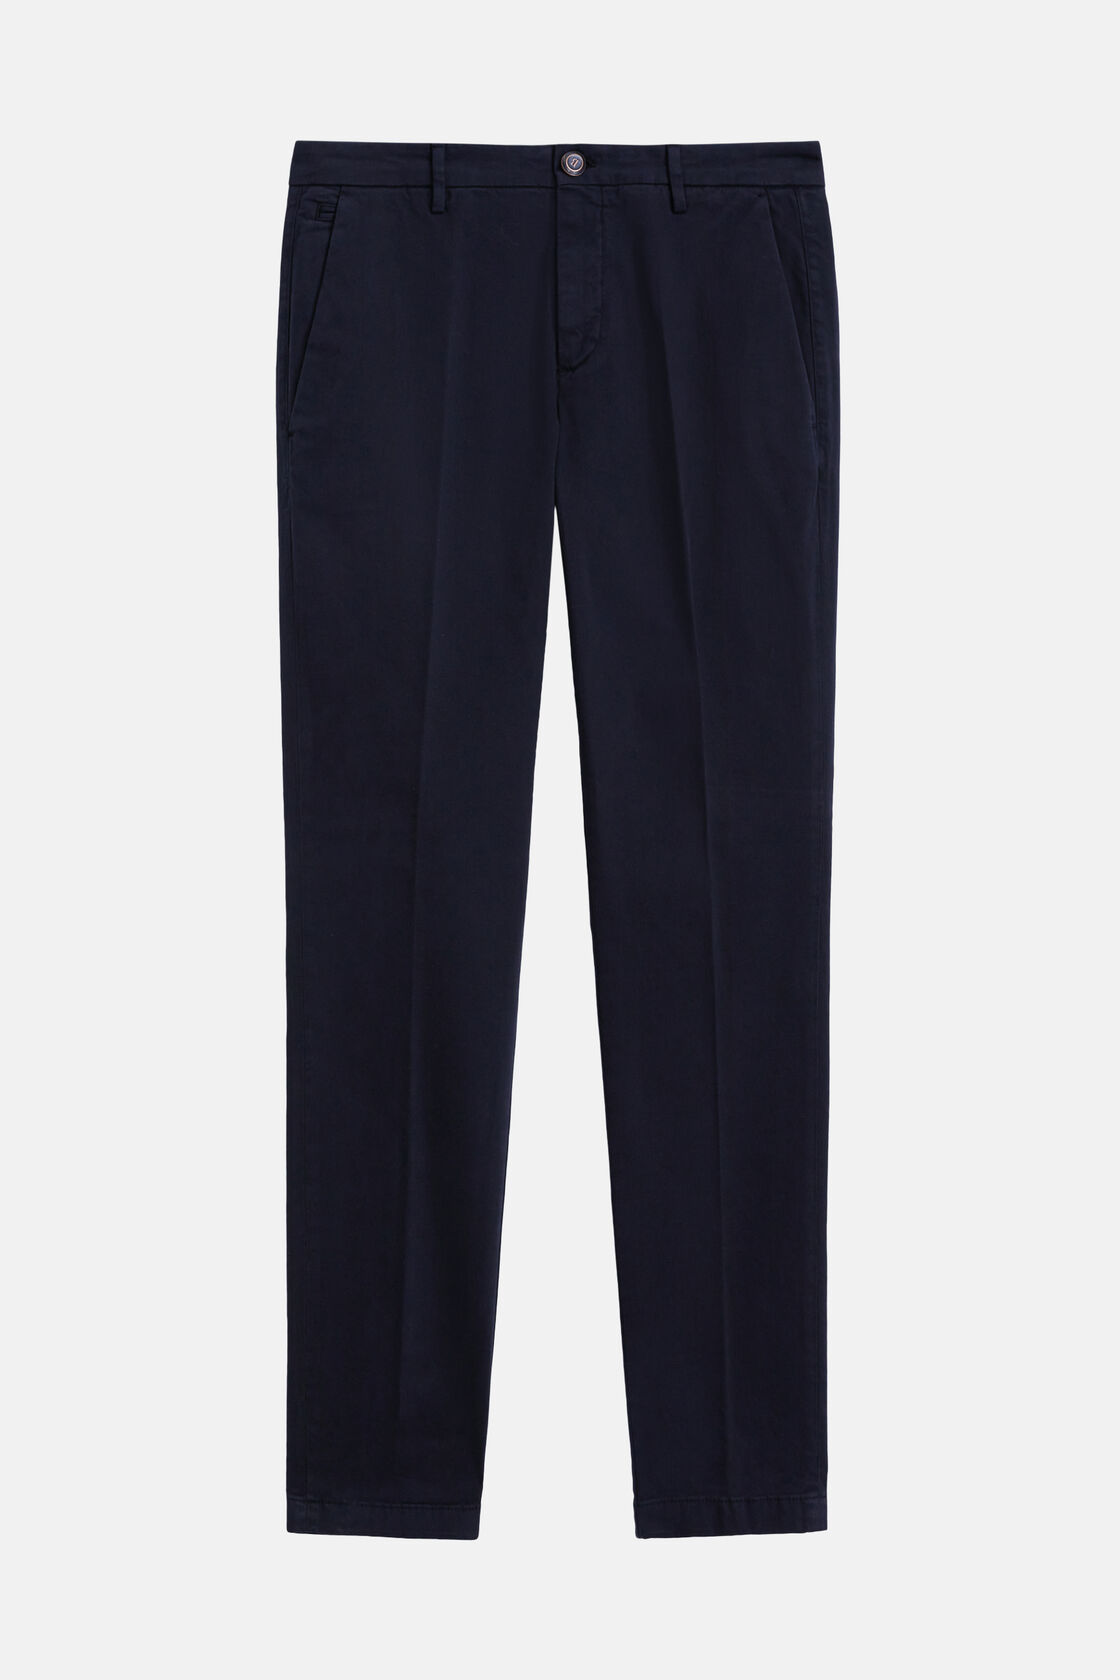 Pantaloni in cotone elasticizzato, Navy, hi-res